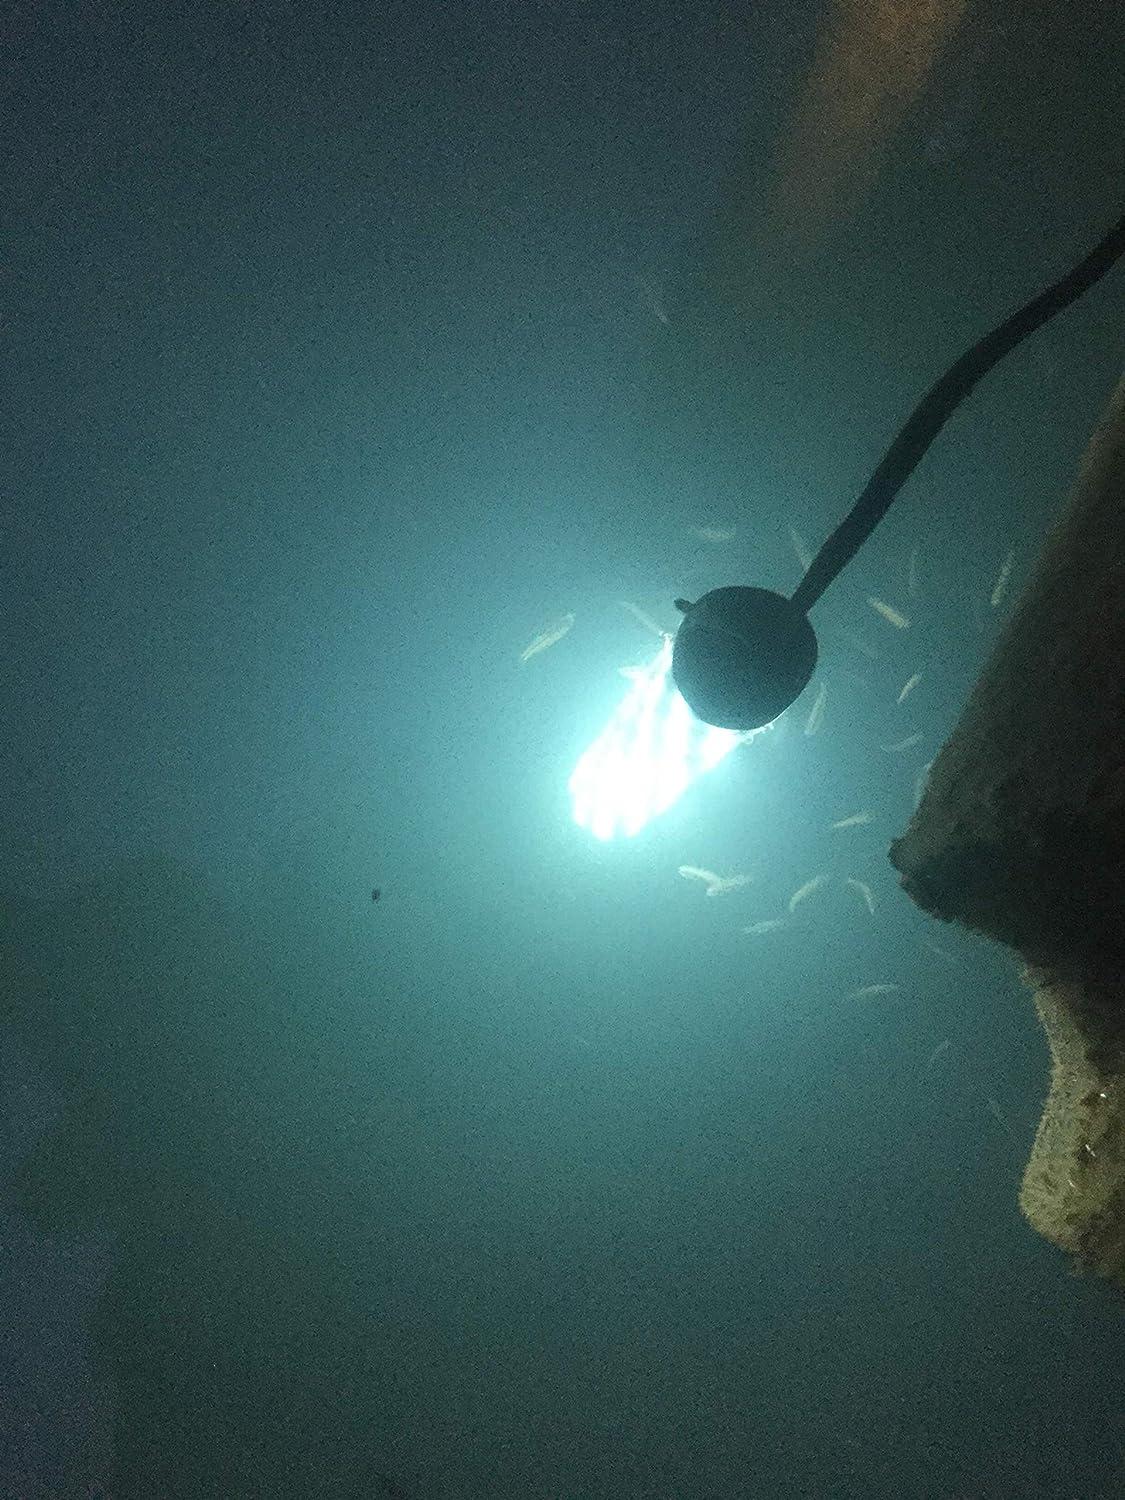 Bright Night Fishing Underwater Fishing Light Battery Clamps 25ft